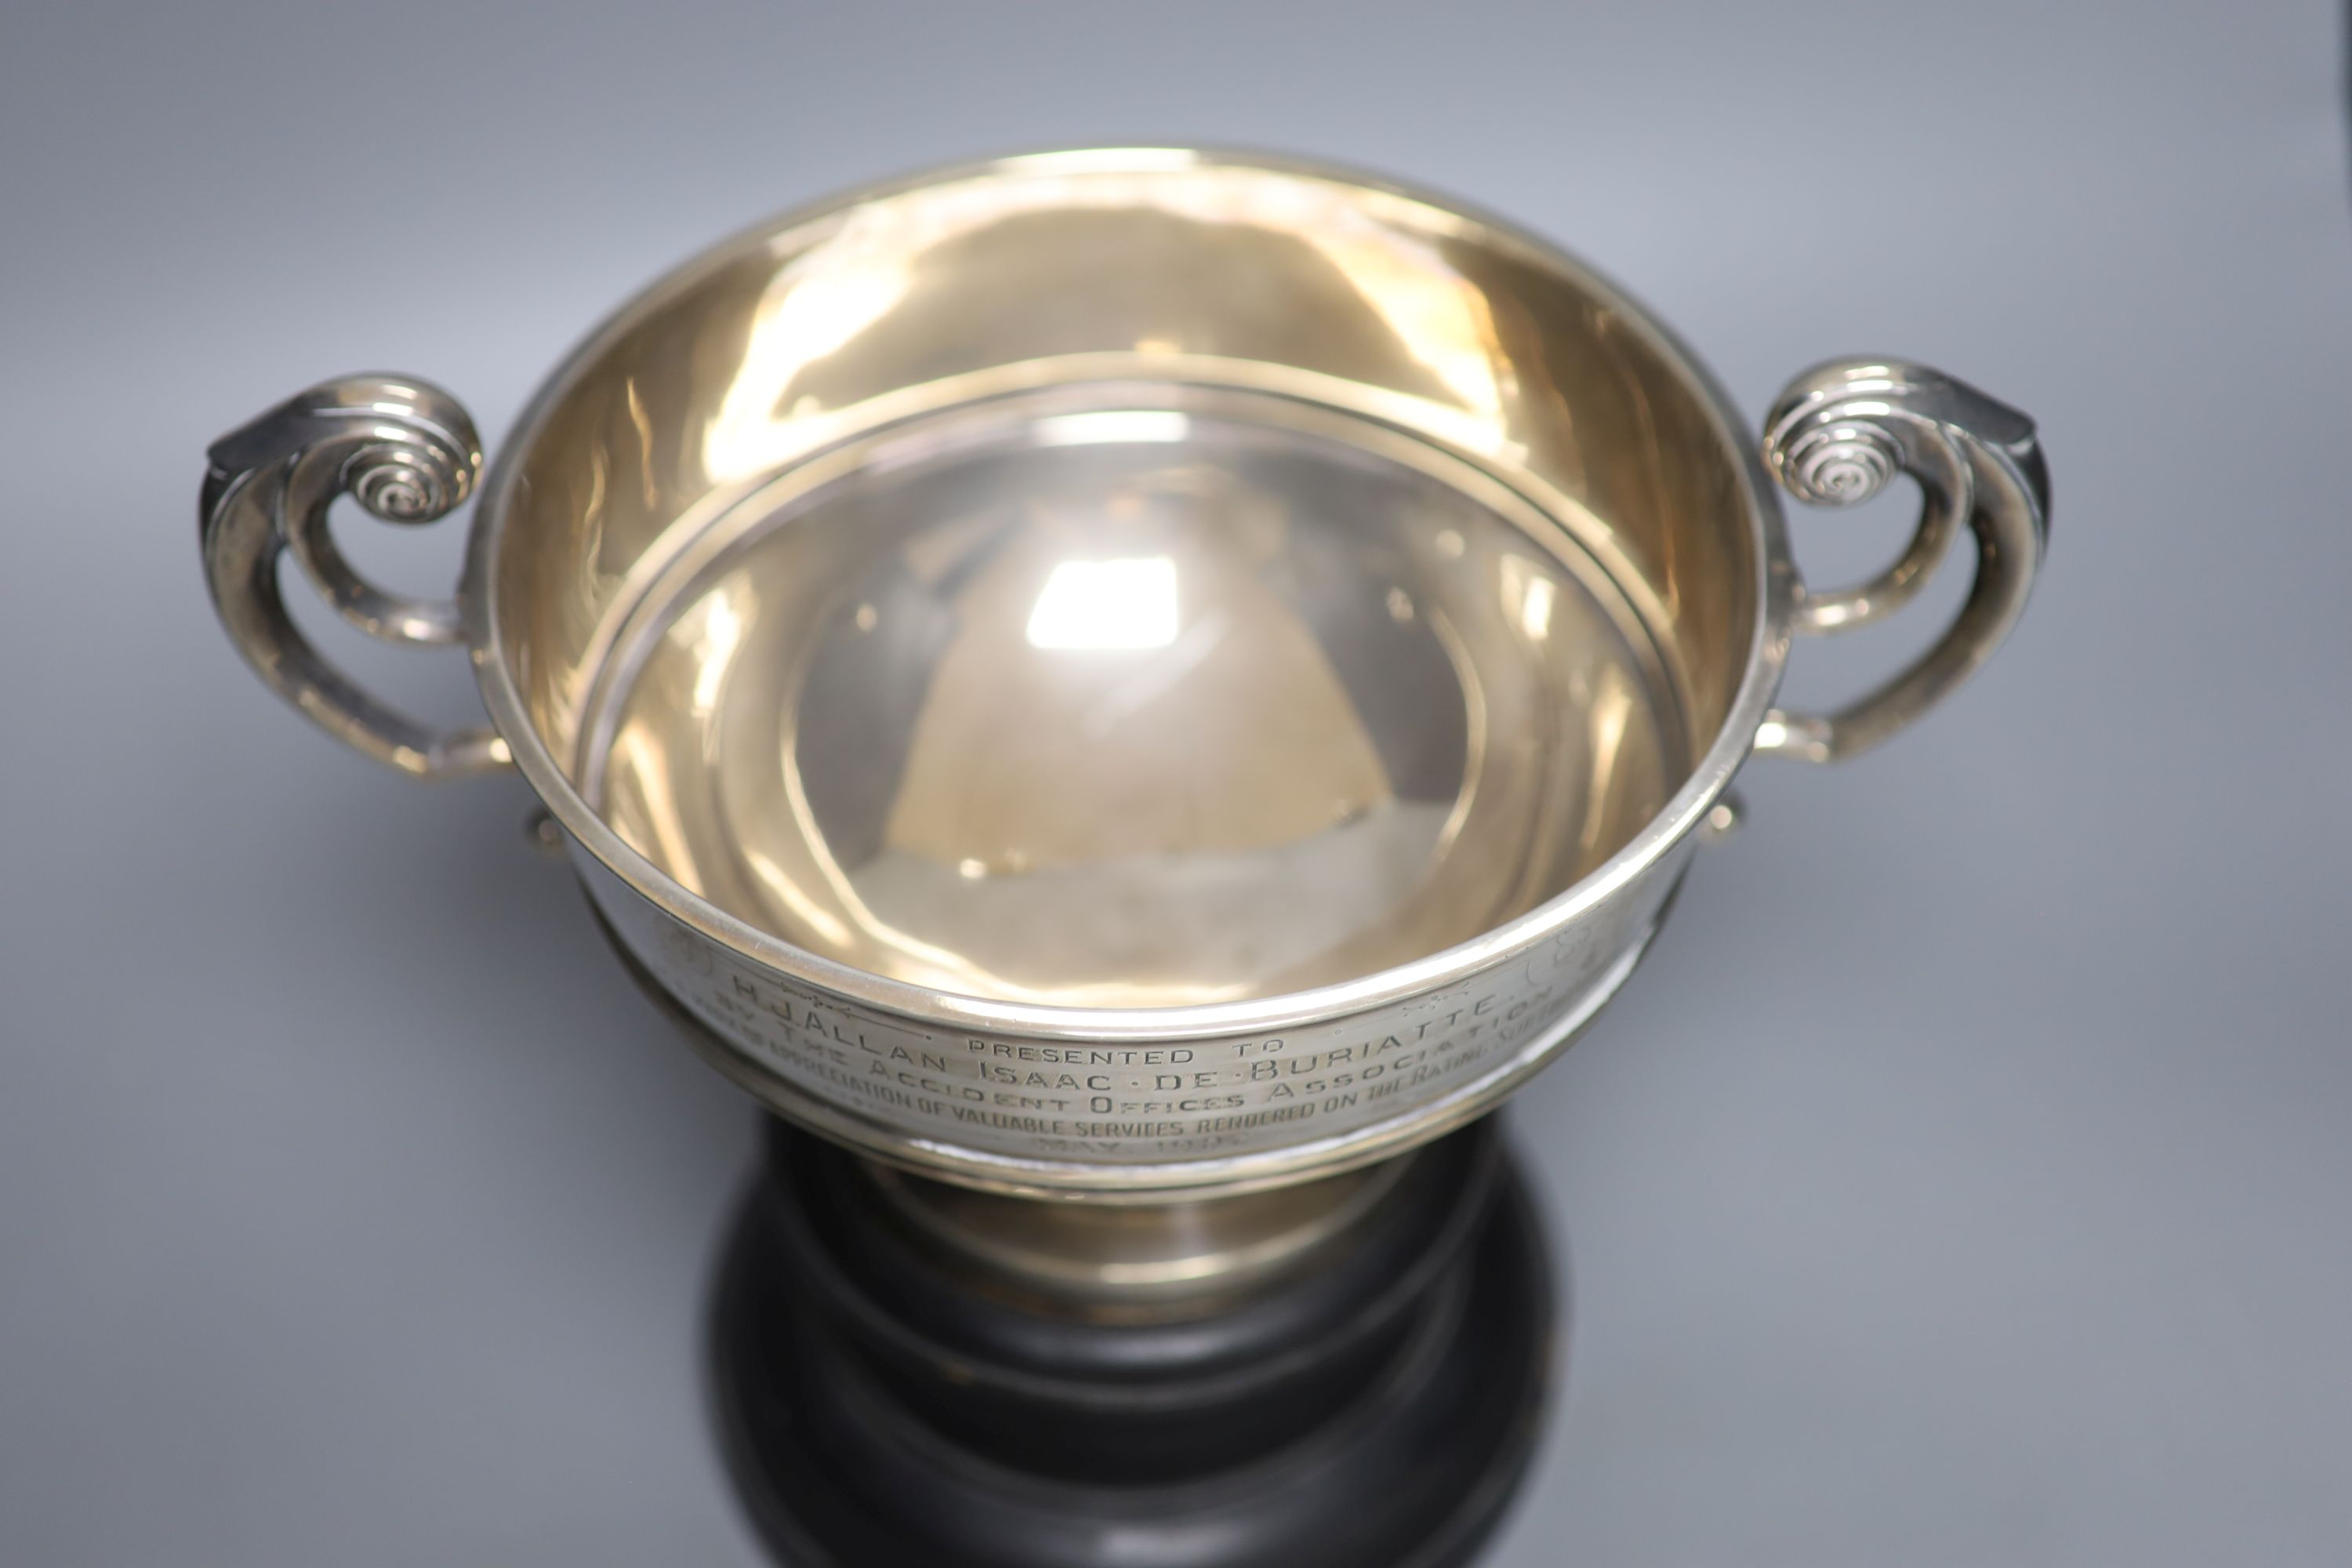 An Edwardian silver two handled presentation trophy bowl, Walker & Hall, Chester, 1906, diameter 20.8cm